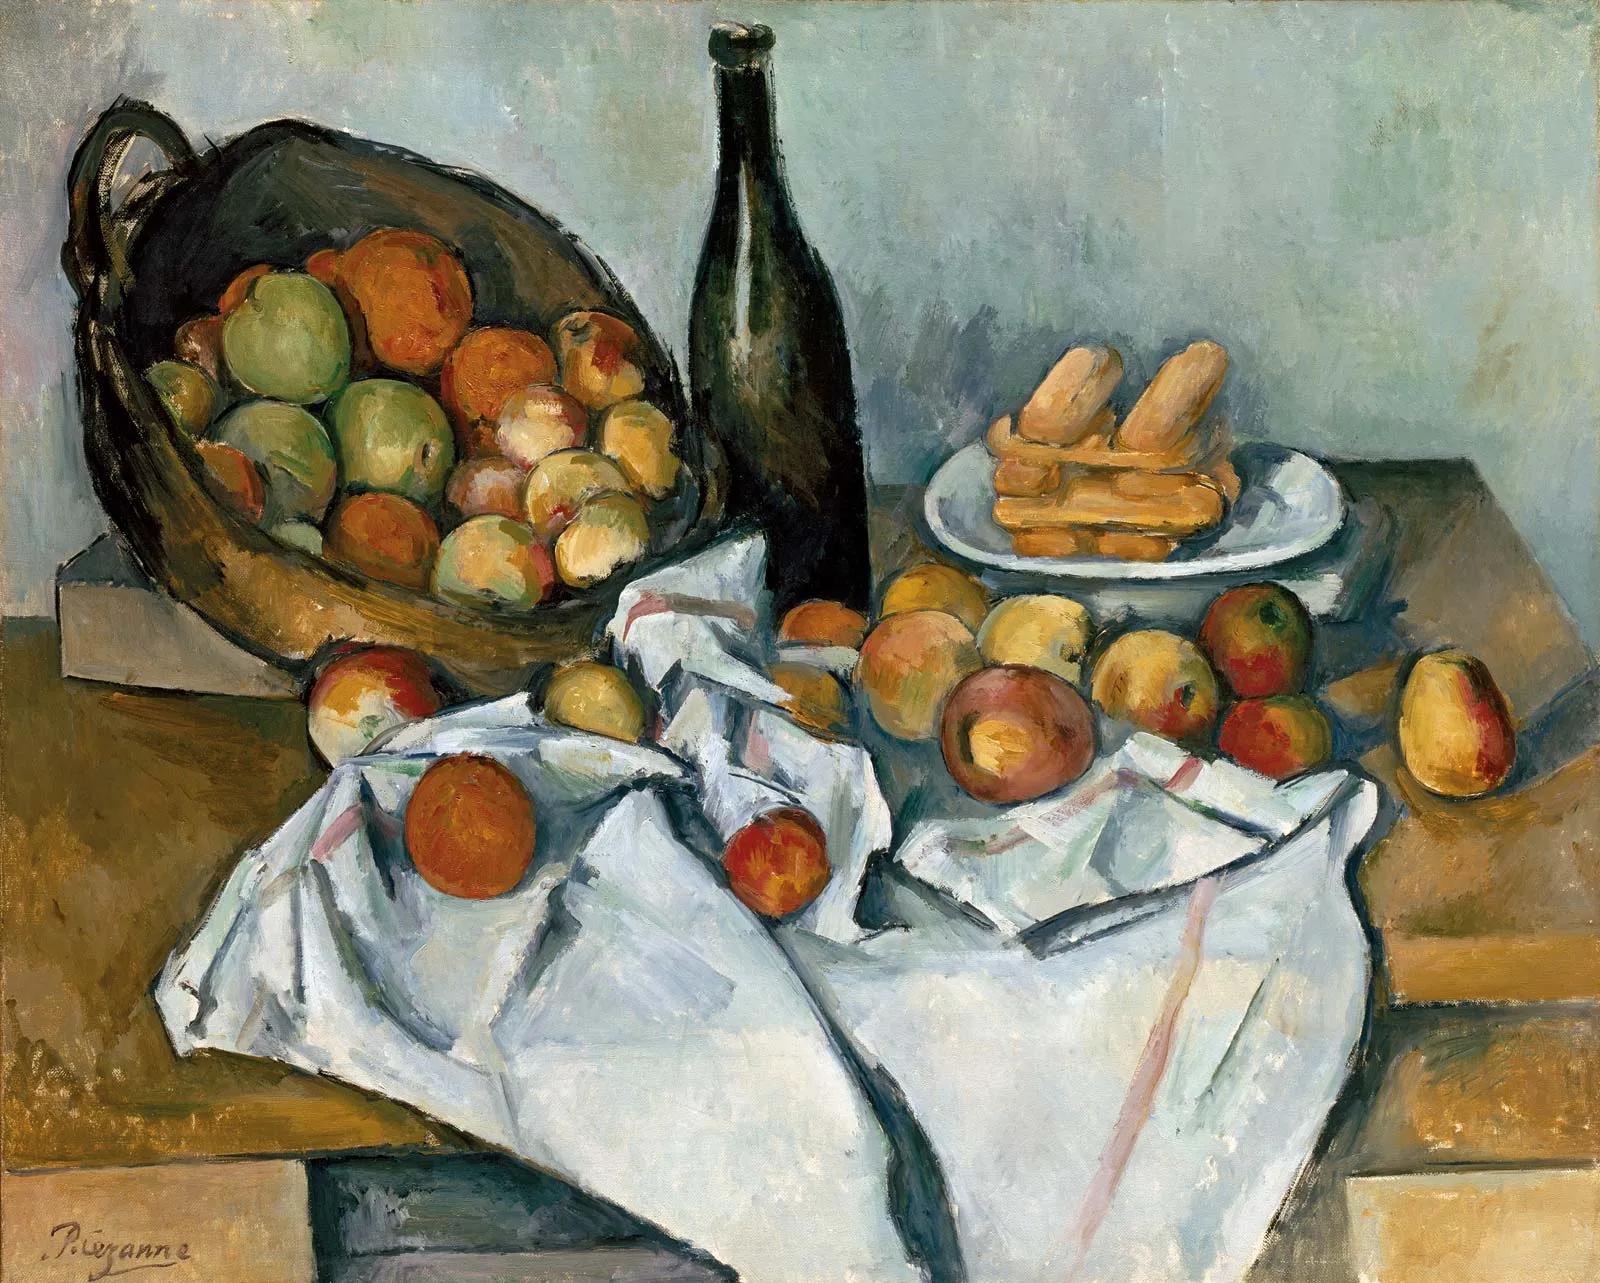 Paul Cézanne: O pai da arte moderna